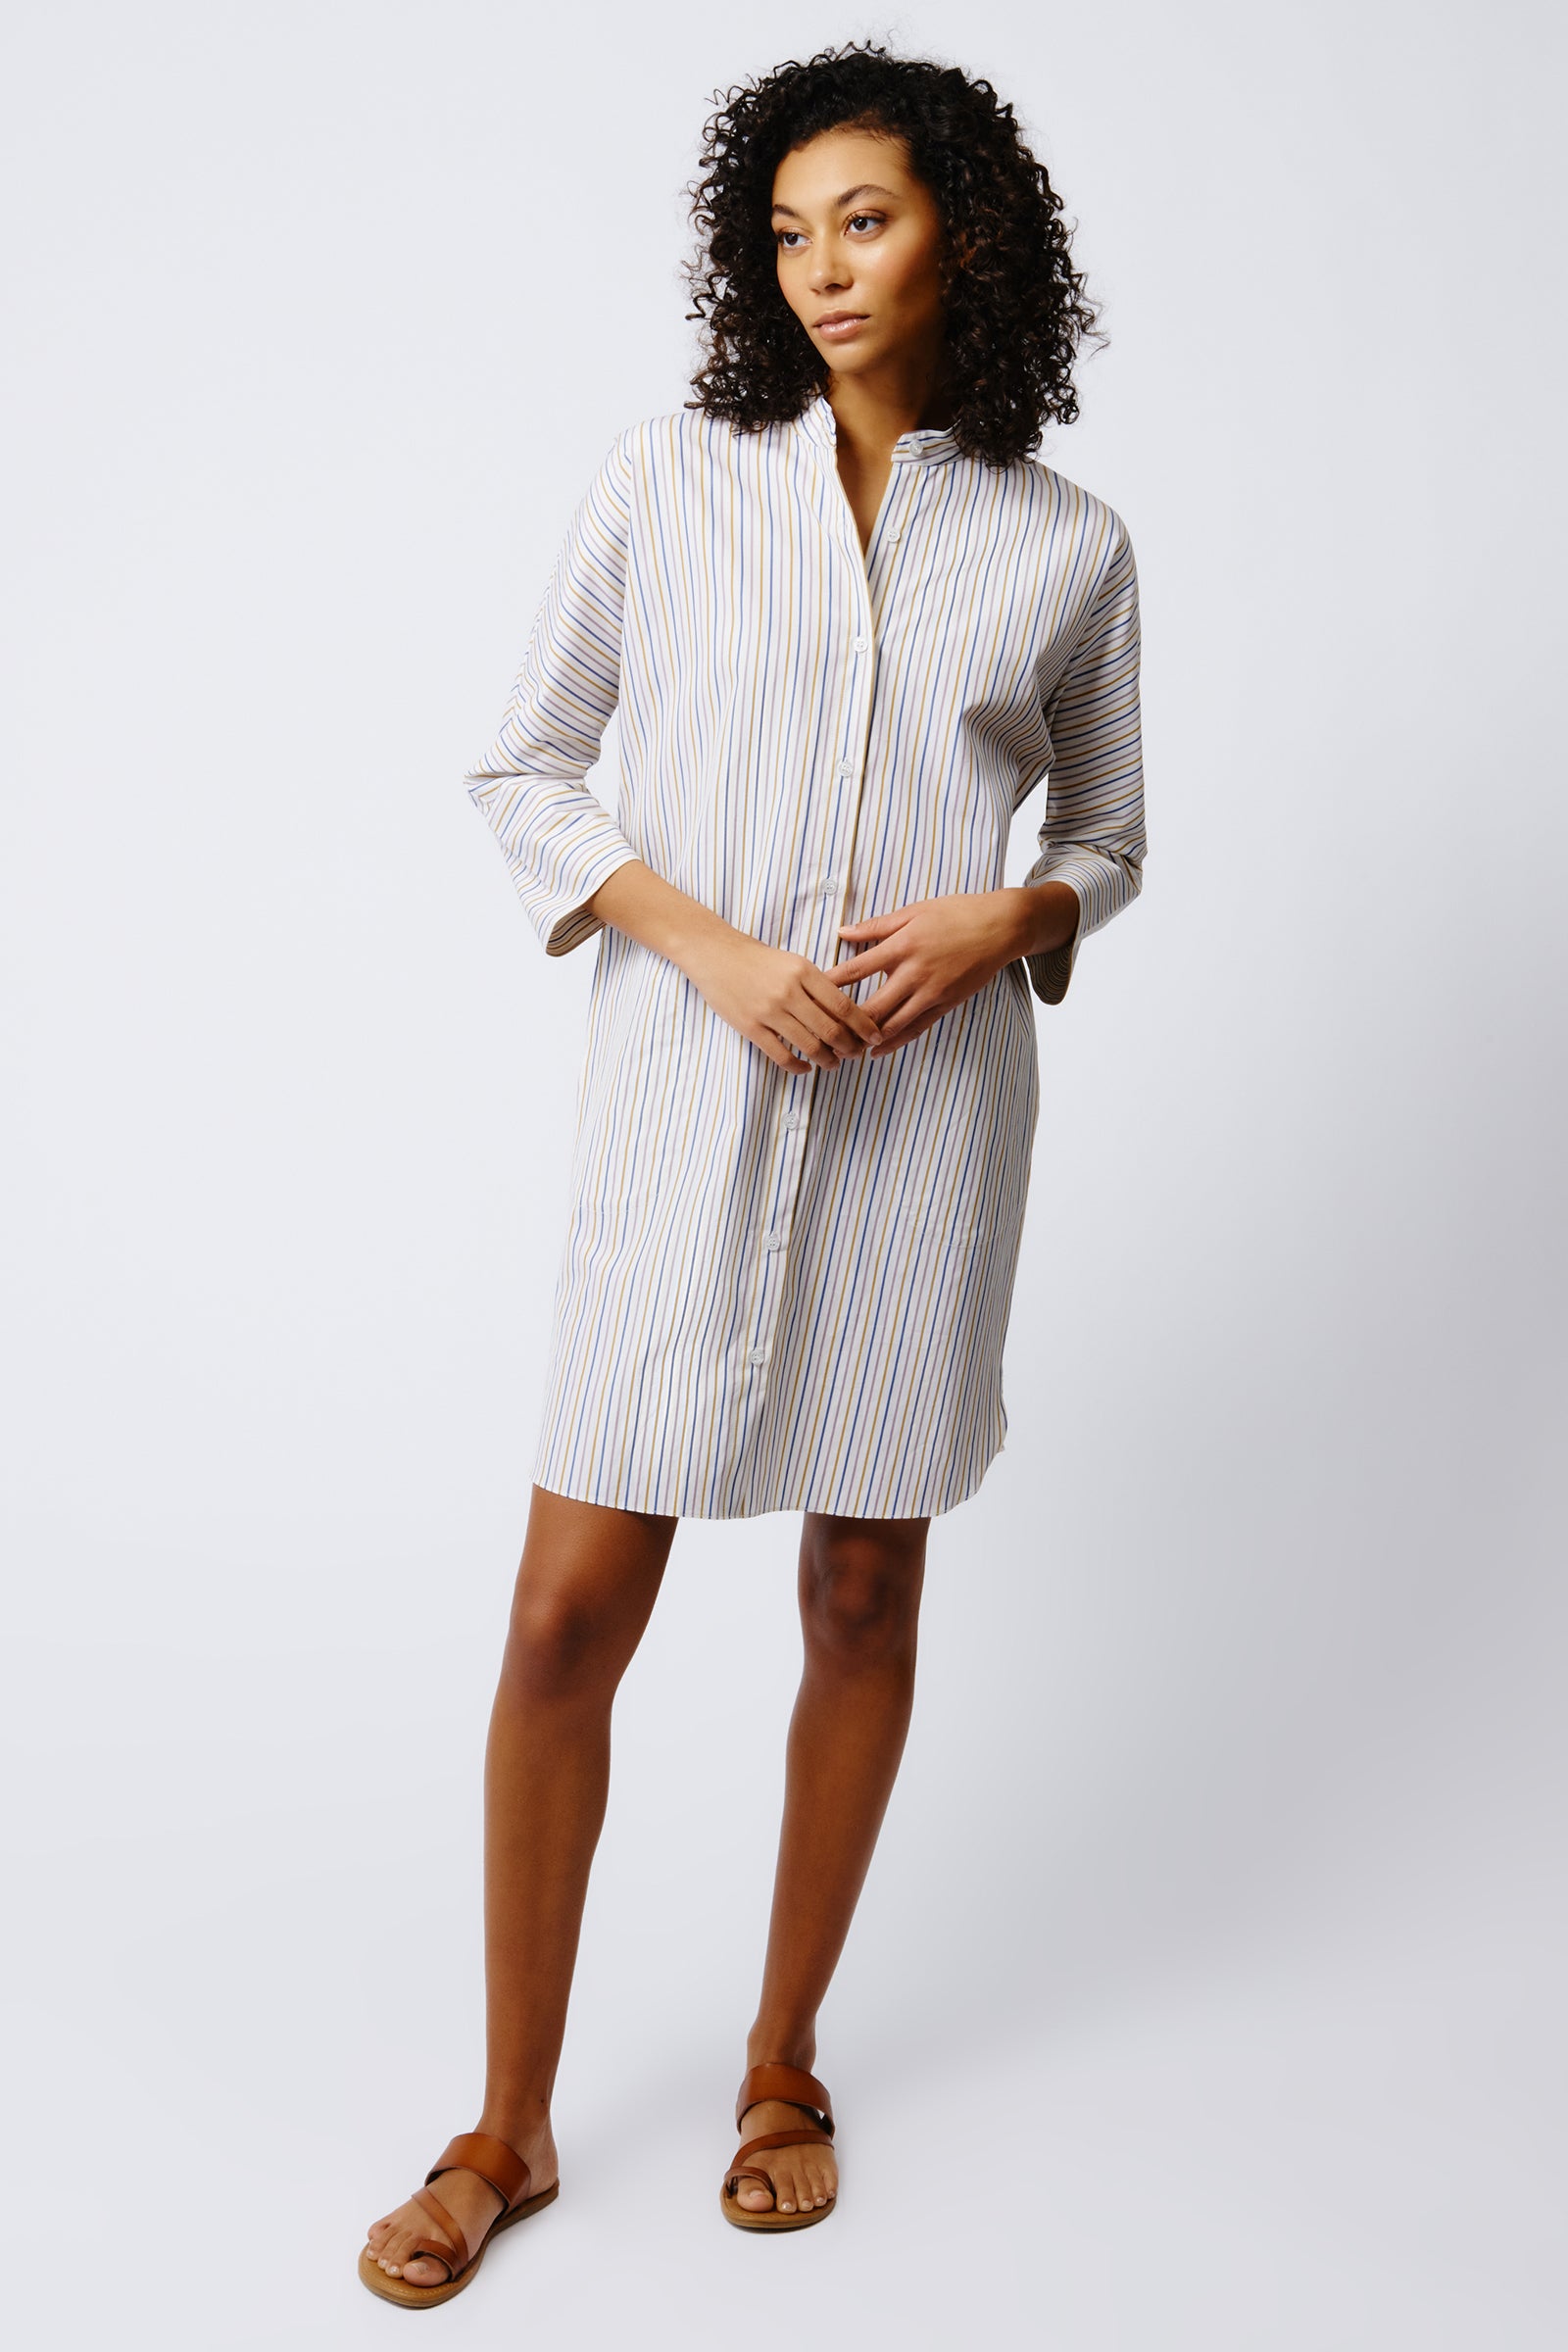 Kal Rieman June Shirt Dress in Multi Stripe on Model Full Front View